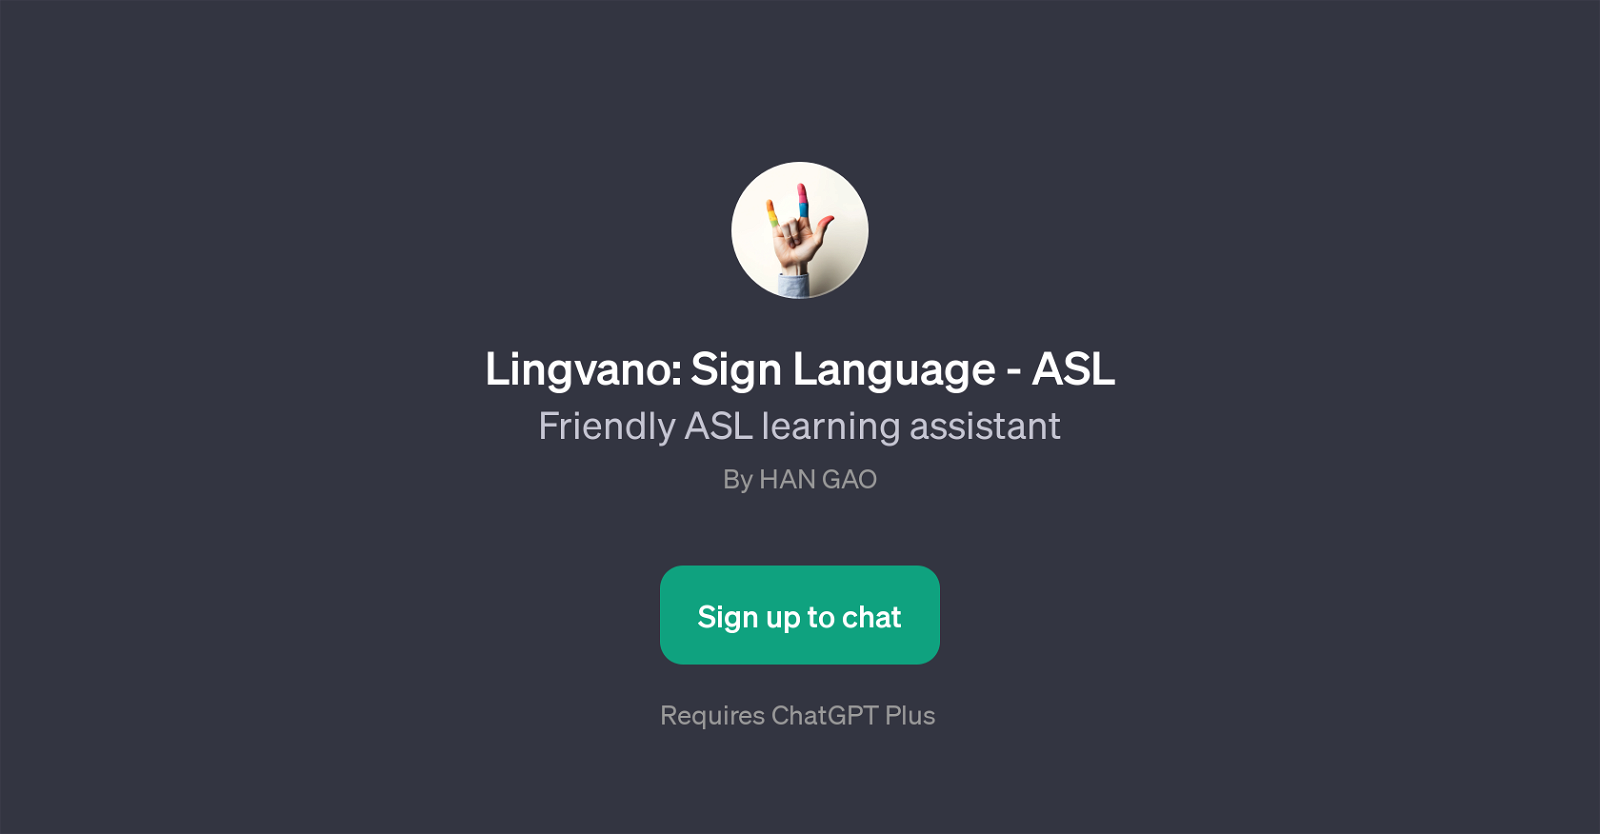 Lingvano: Sign Language - ASL website